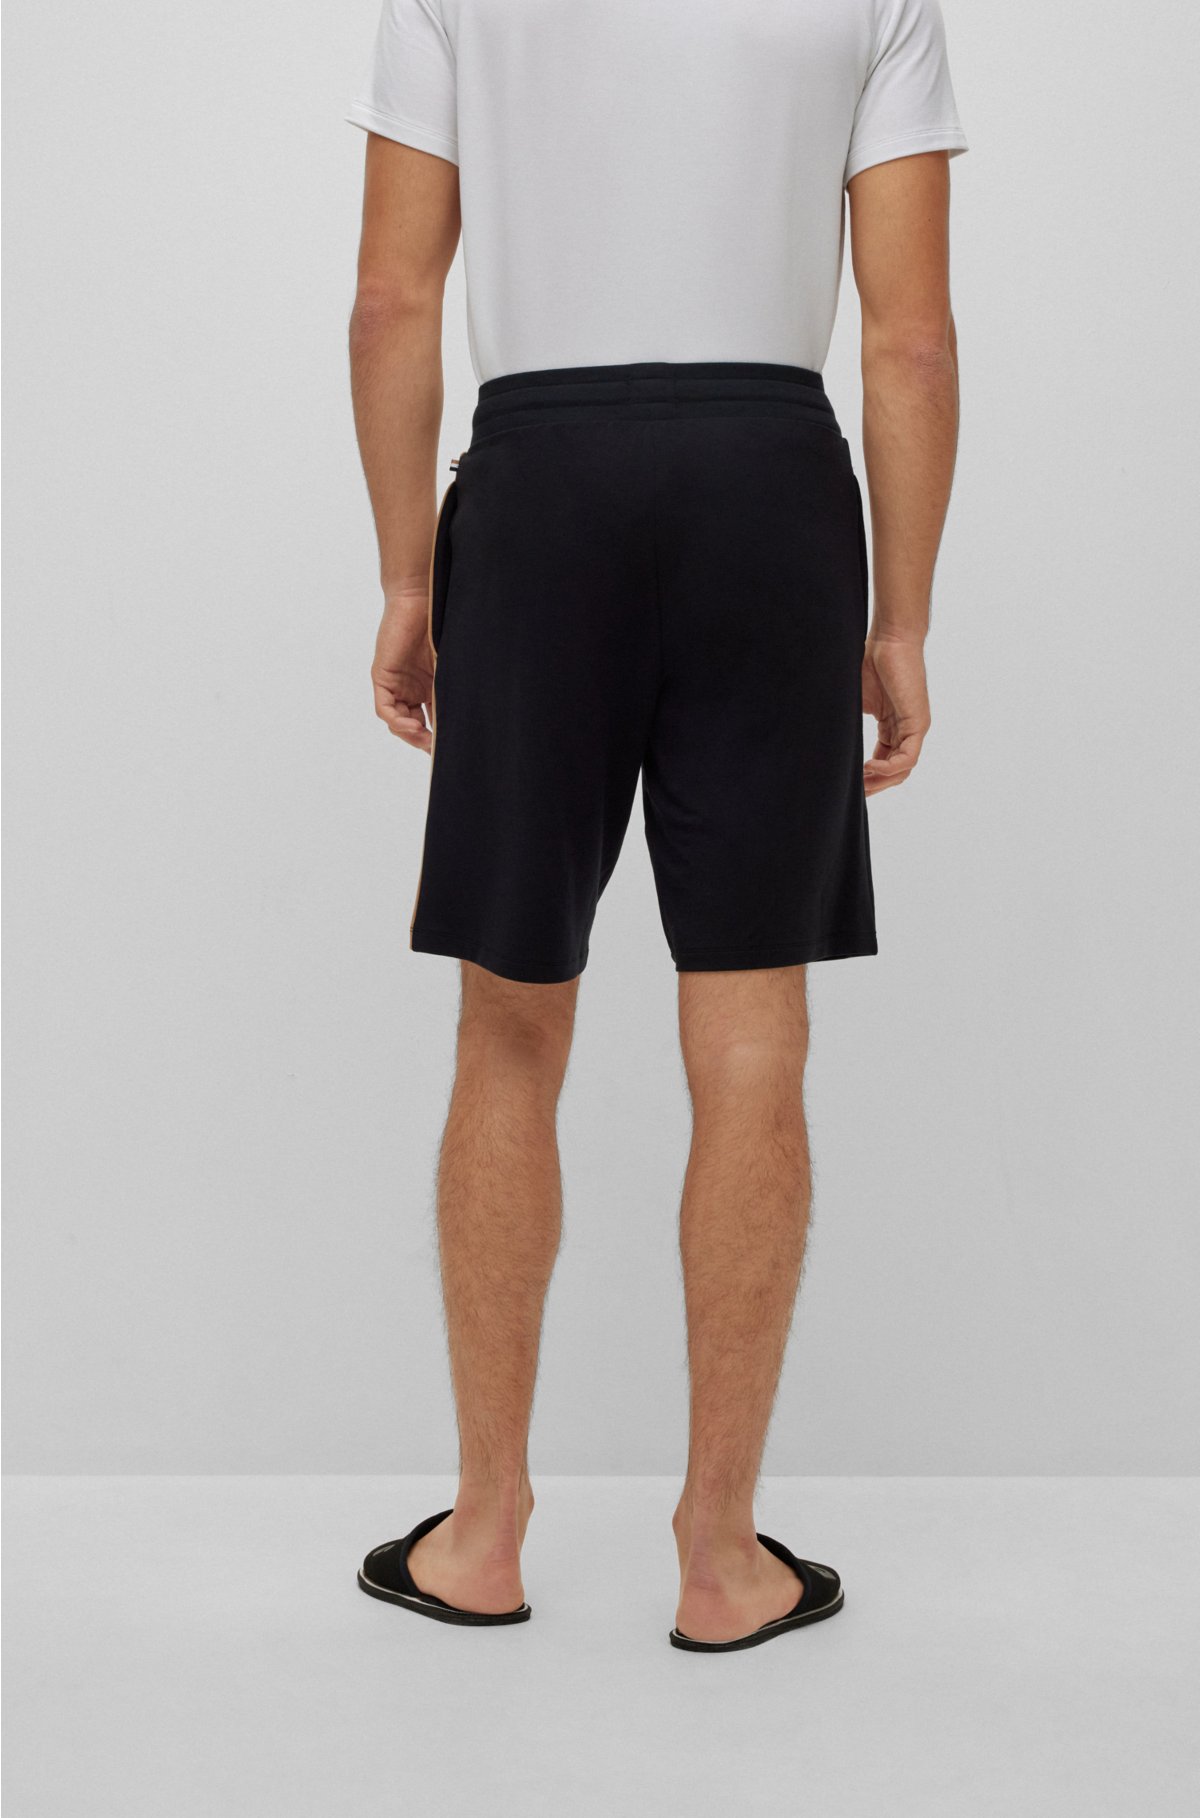 Men's Contrast Logo Waistband Shorts - Men's Loungewear & Pajamas